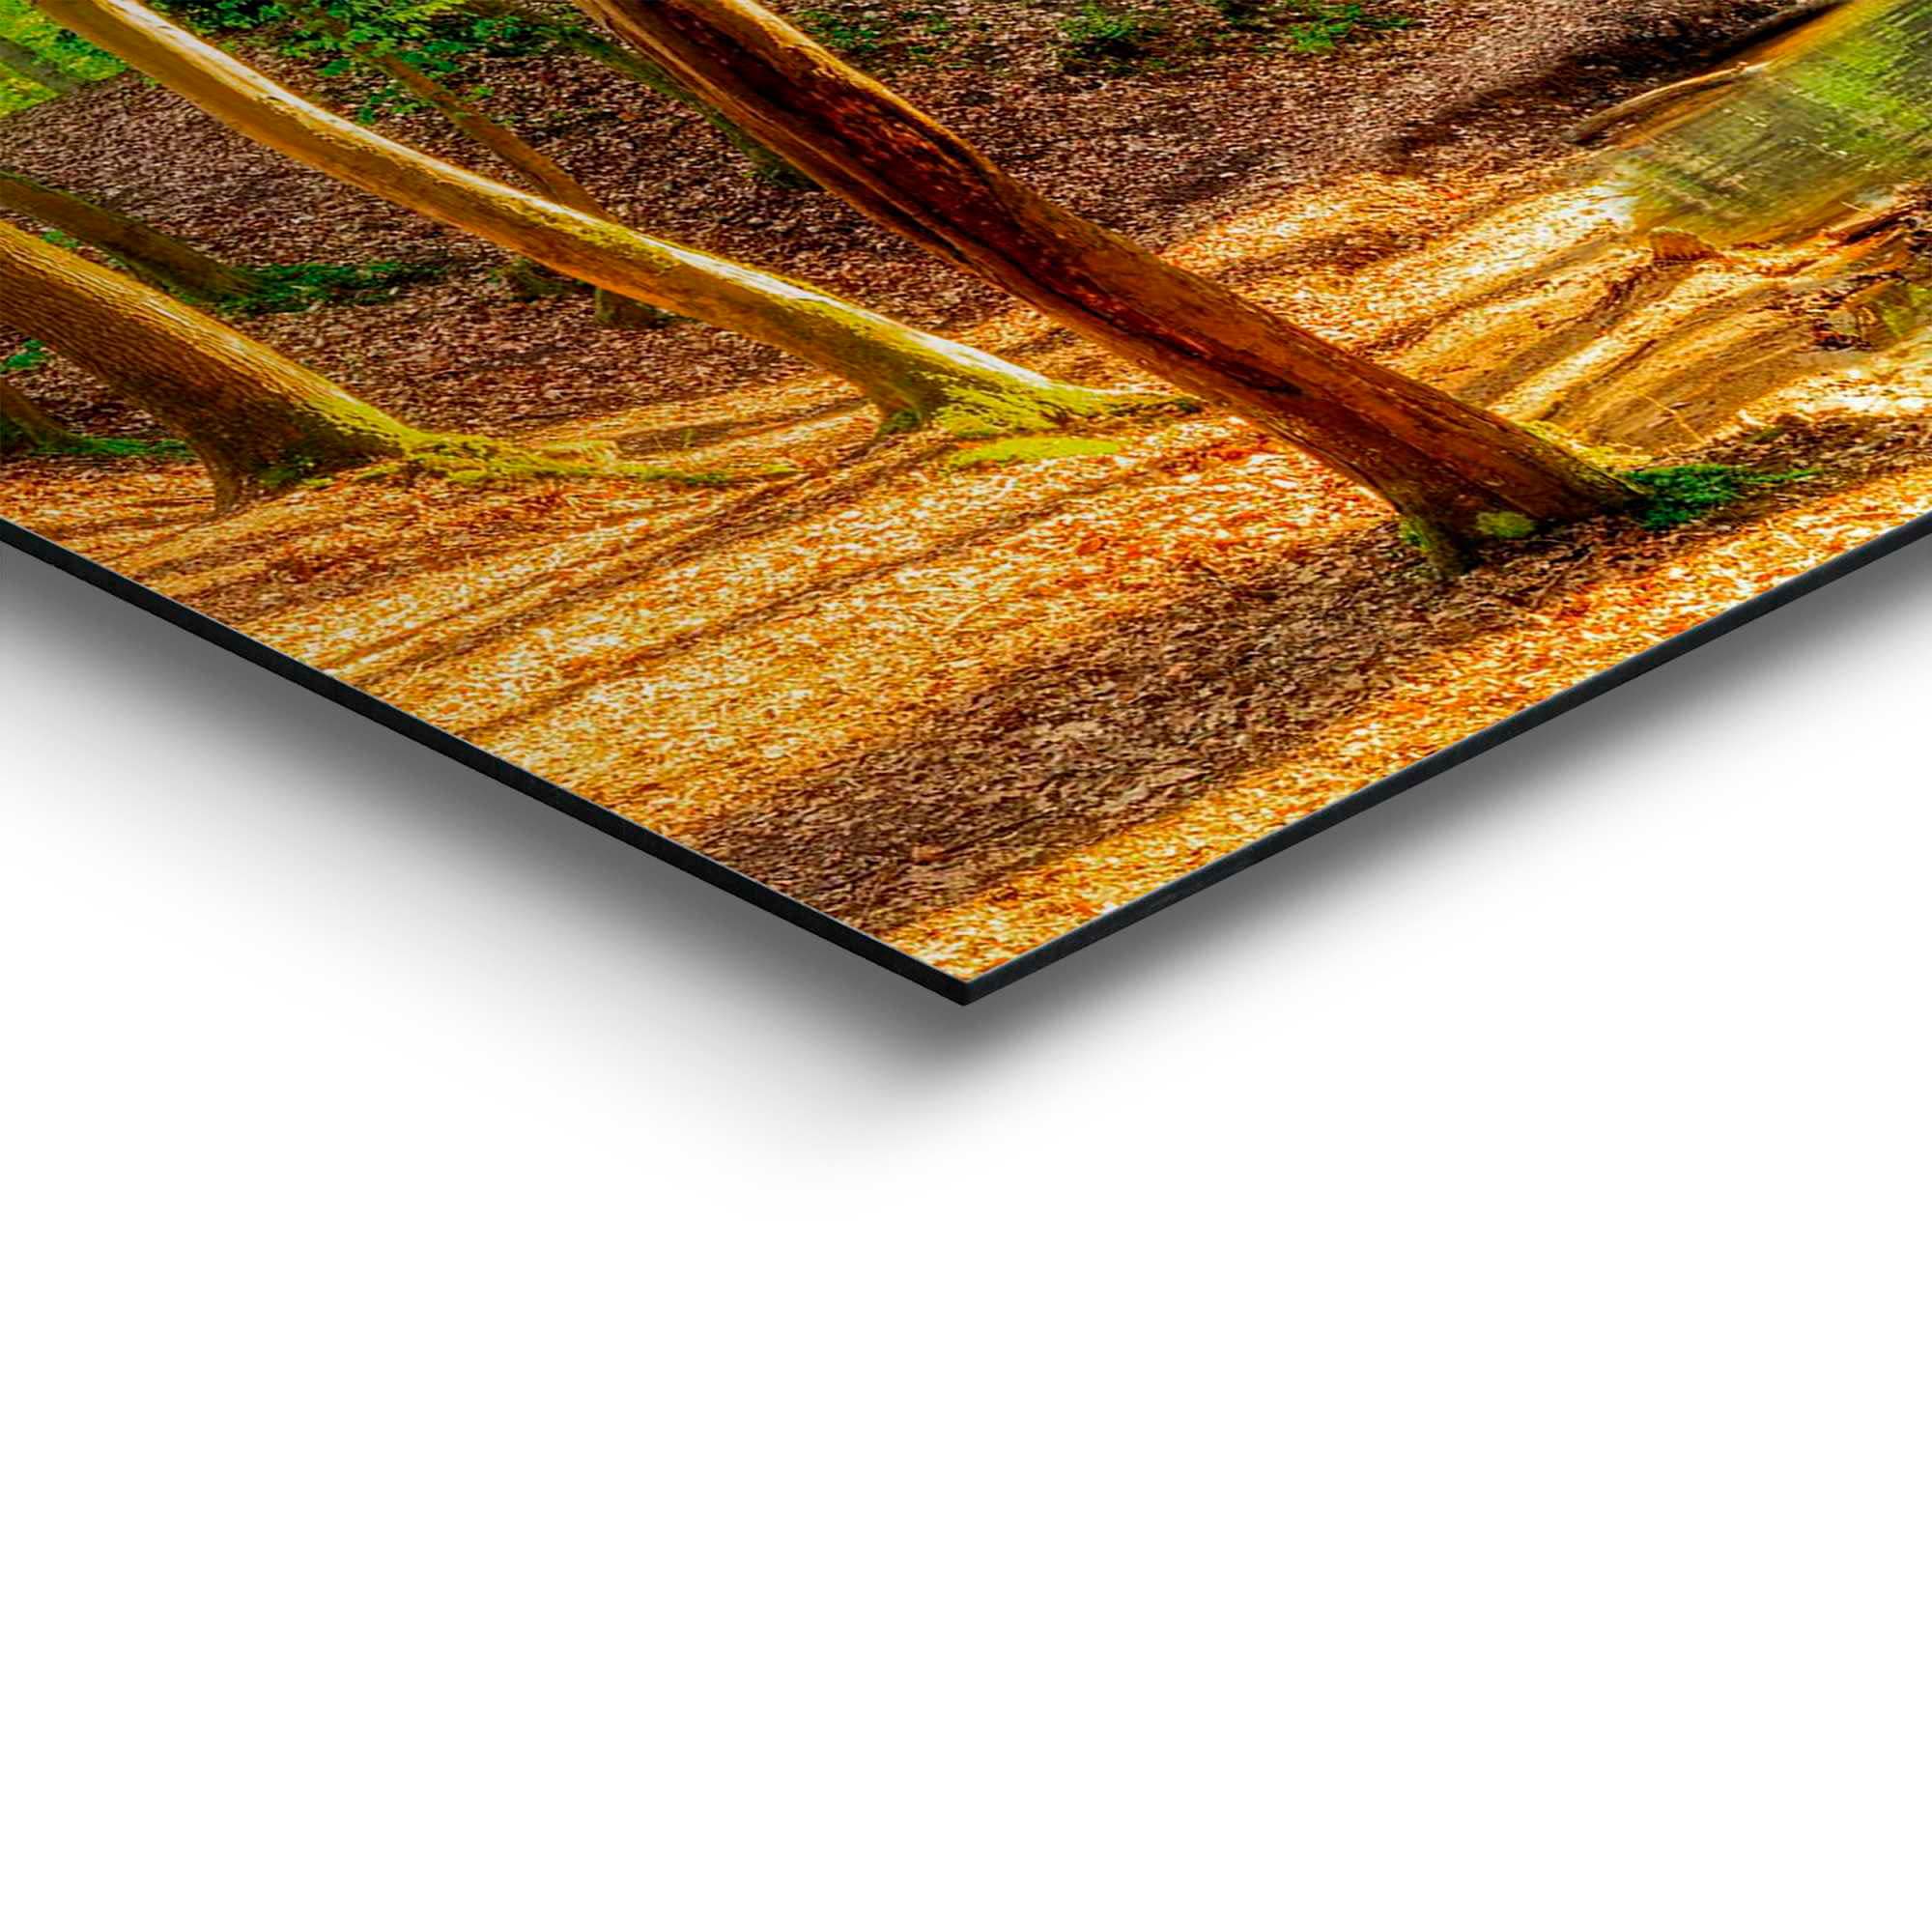 Reinders! bestellen Deco-Panel »Sonniger Wald« auf Raten